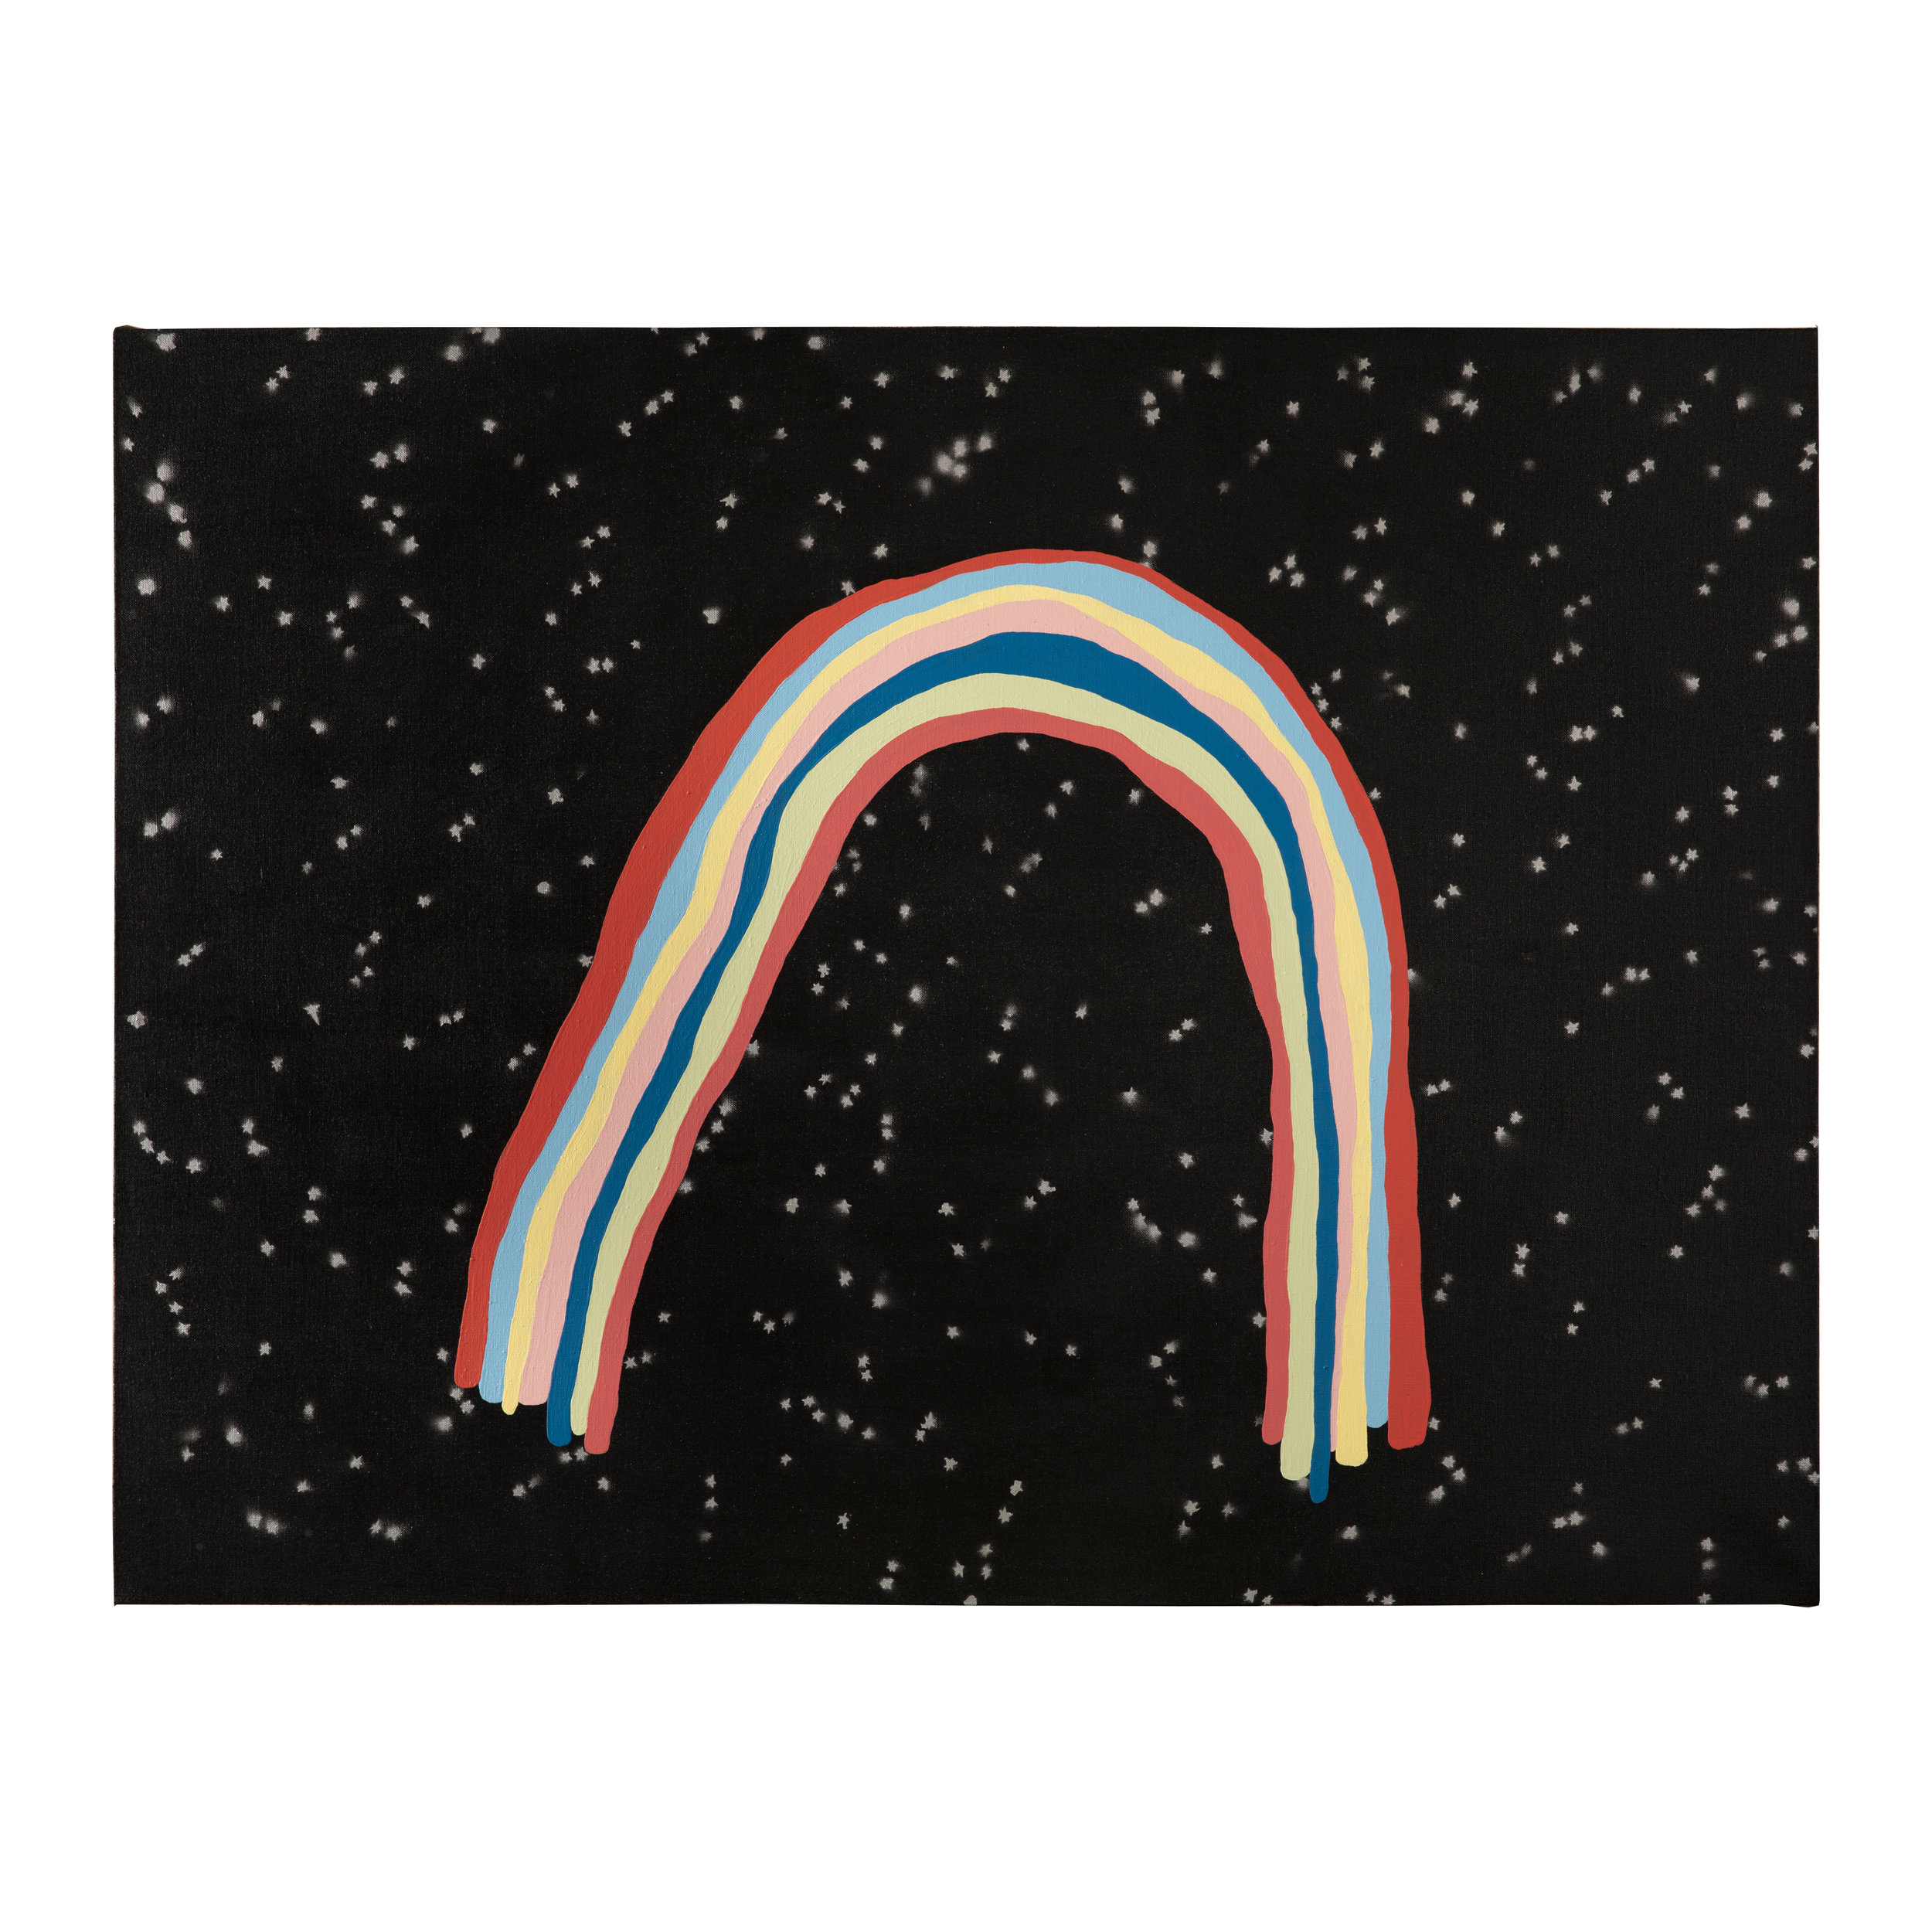   Night Rainbow   Mixed media on linen, 31” x 41”, 2019. Not For Sale.  